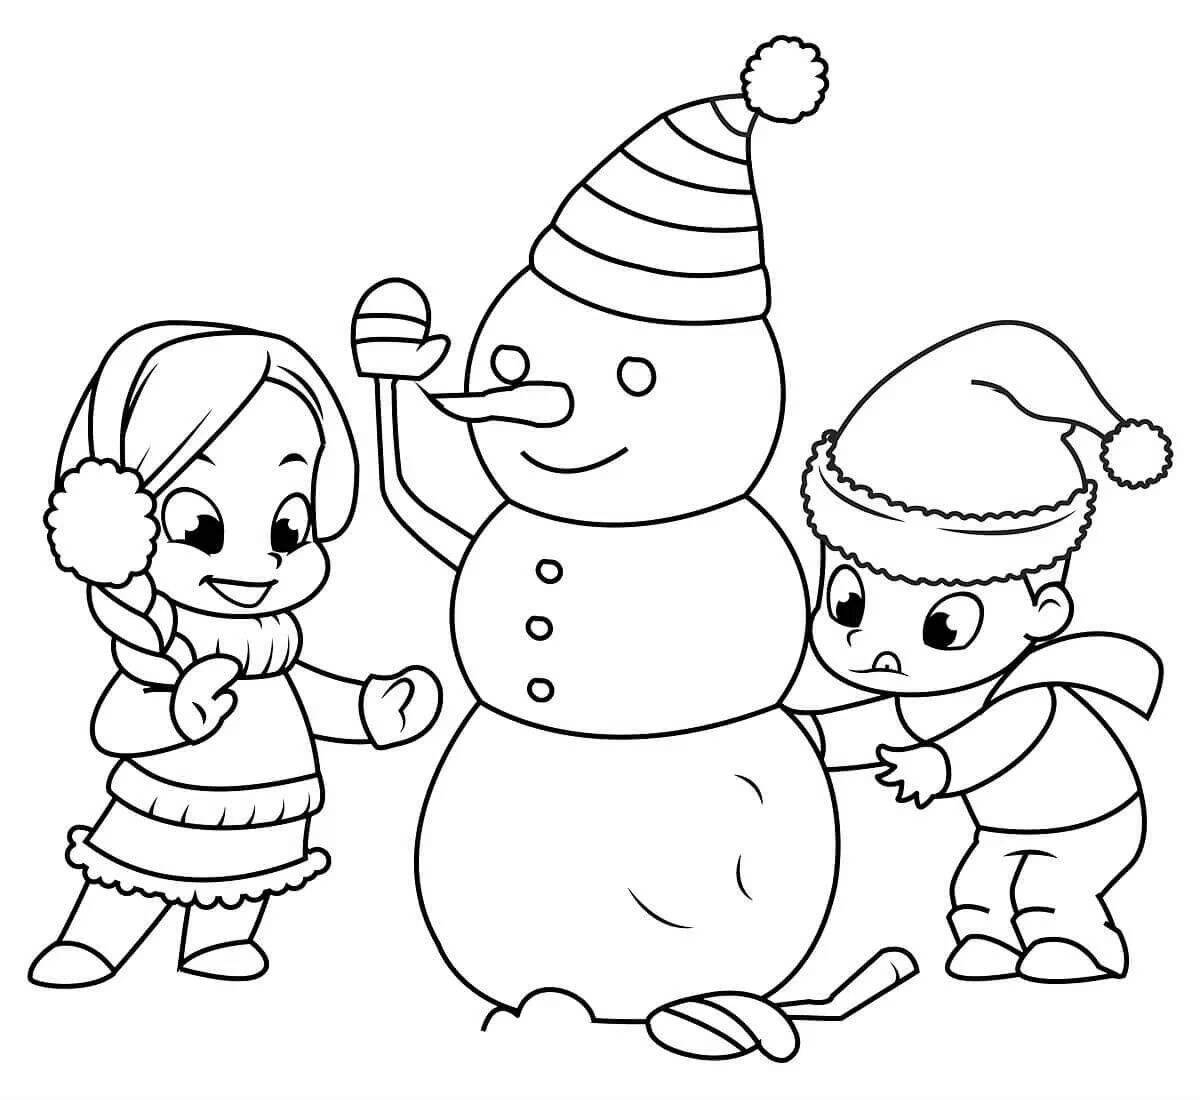 Coloring page adorable big snowman